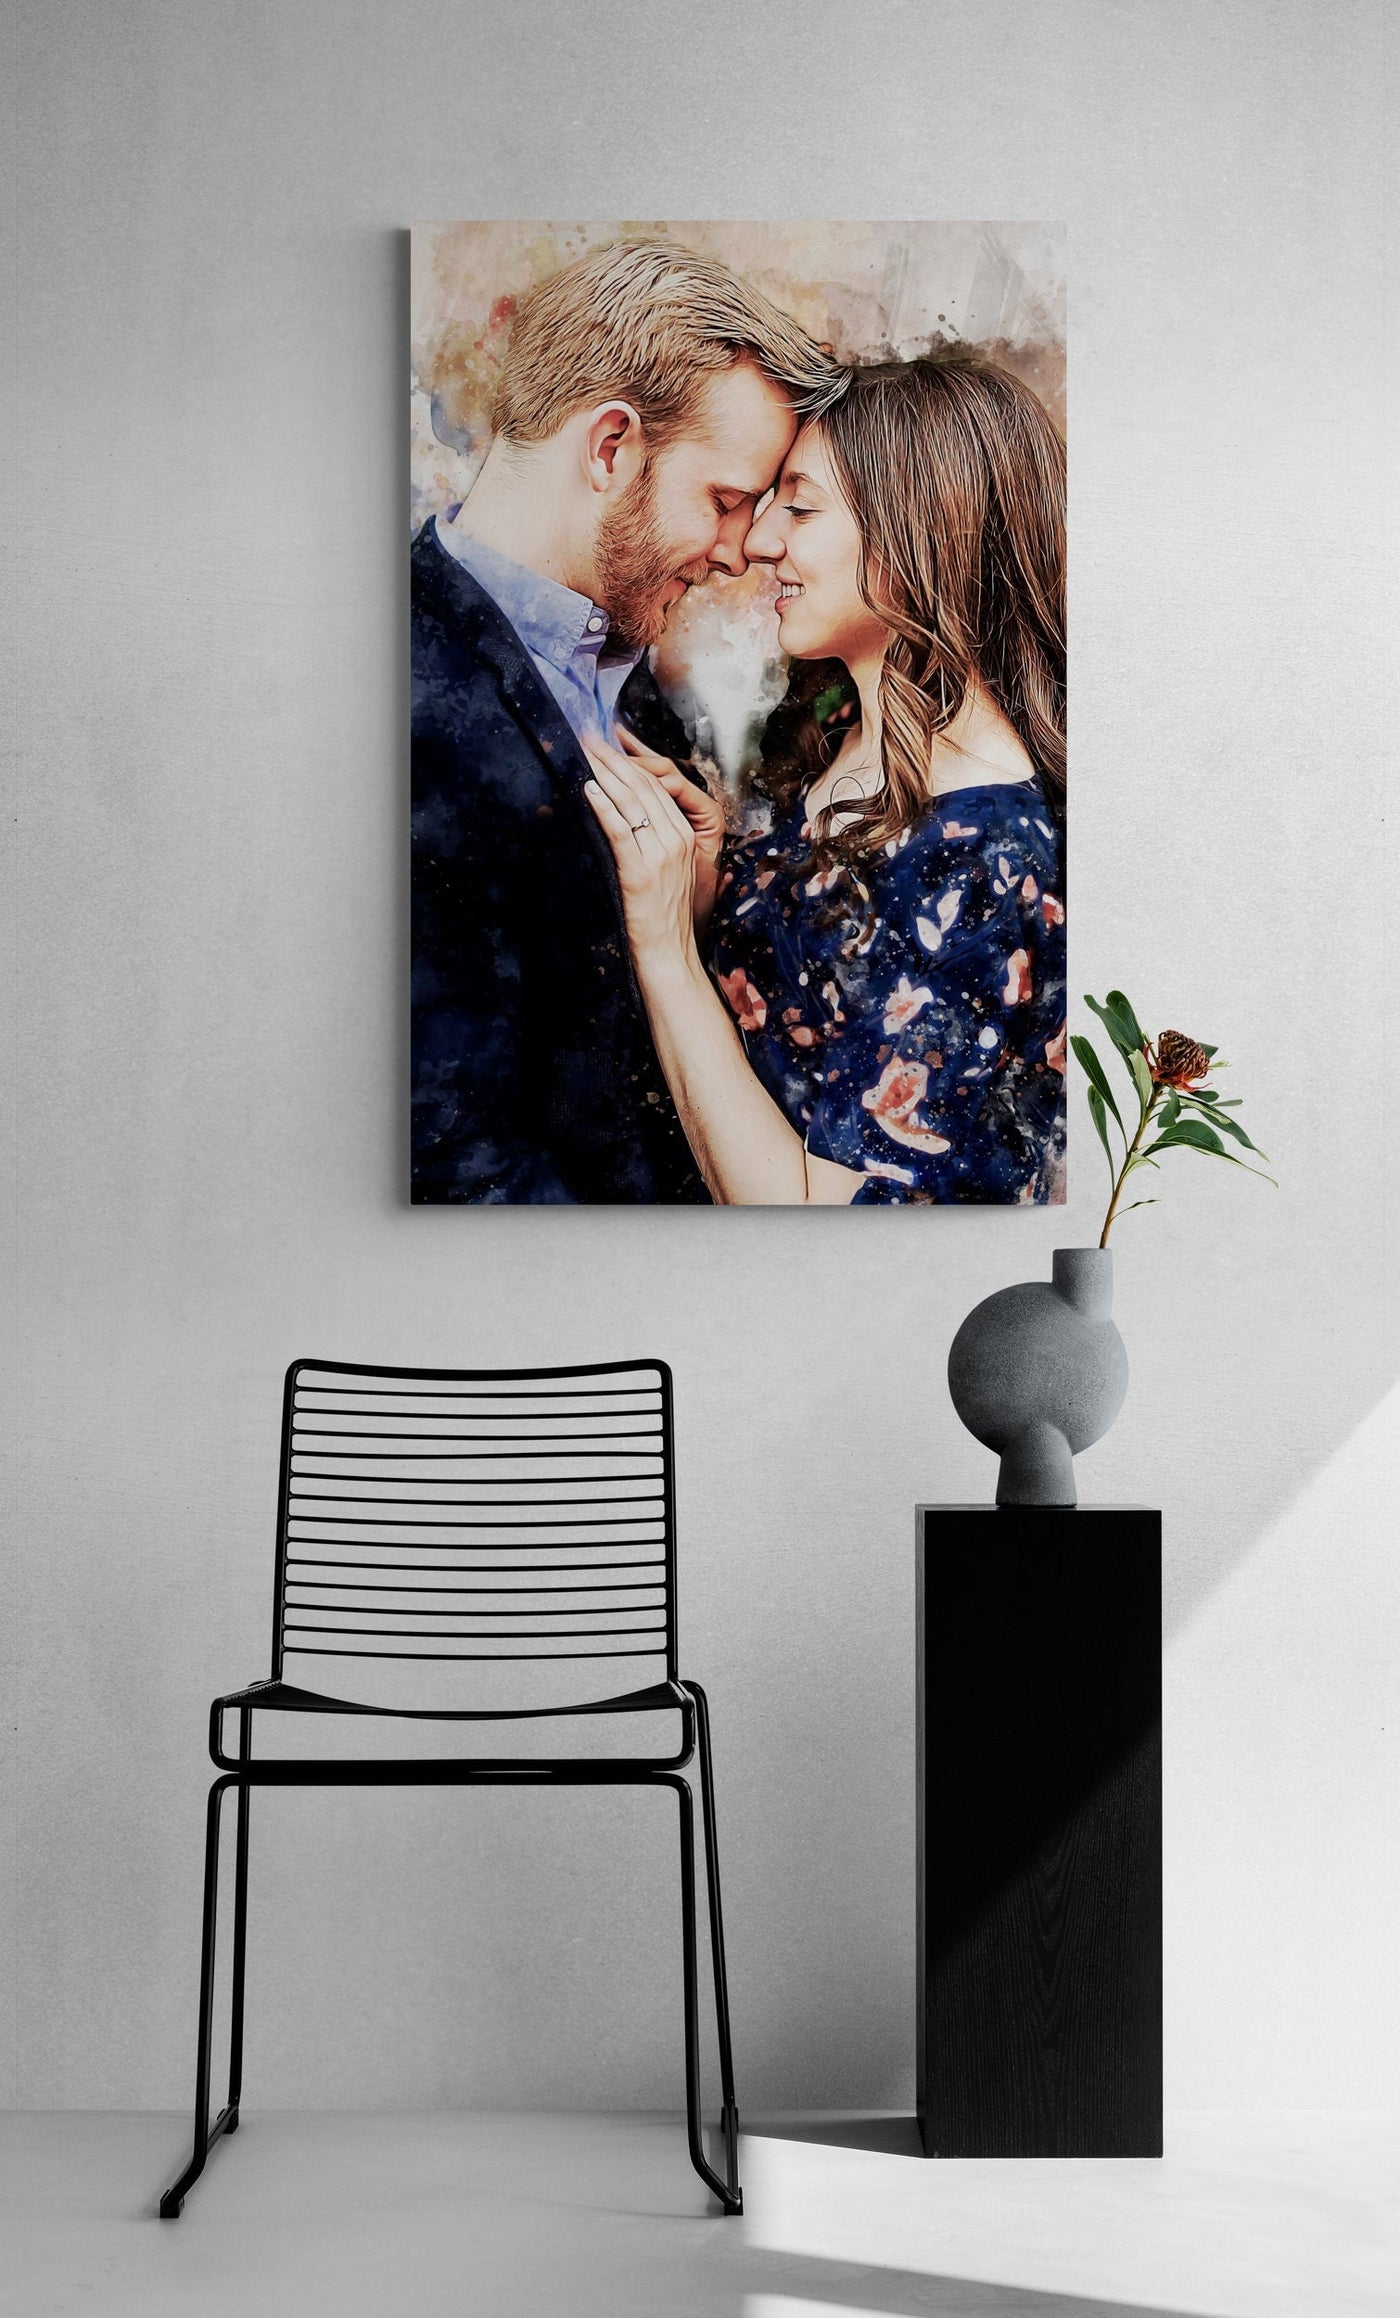 Engagement portrait canvas art Wall art git ideas for her /him Turn photo into digital watercolor painting Personalized art Couple portrait